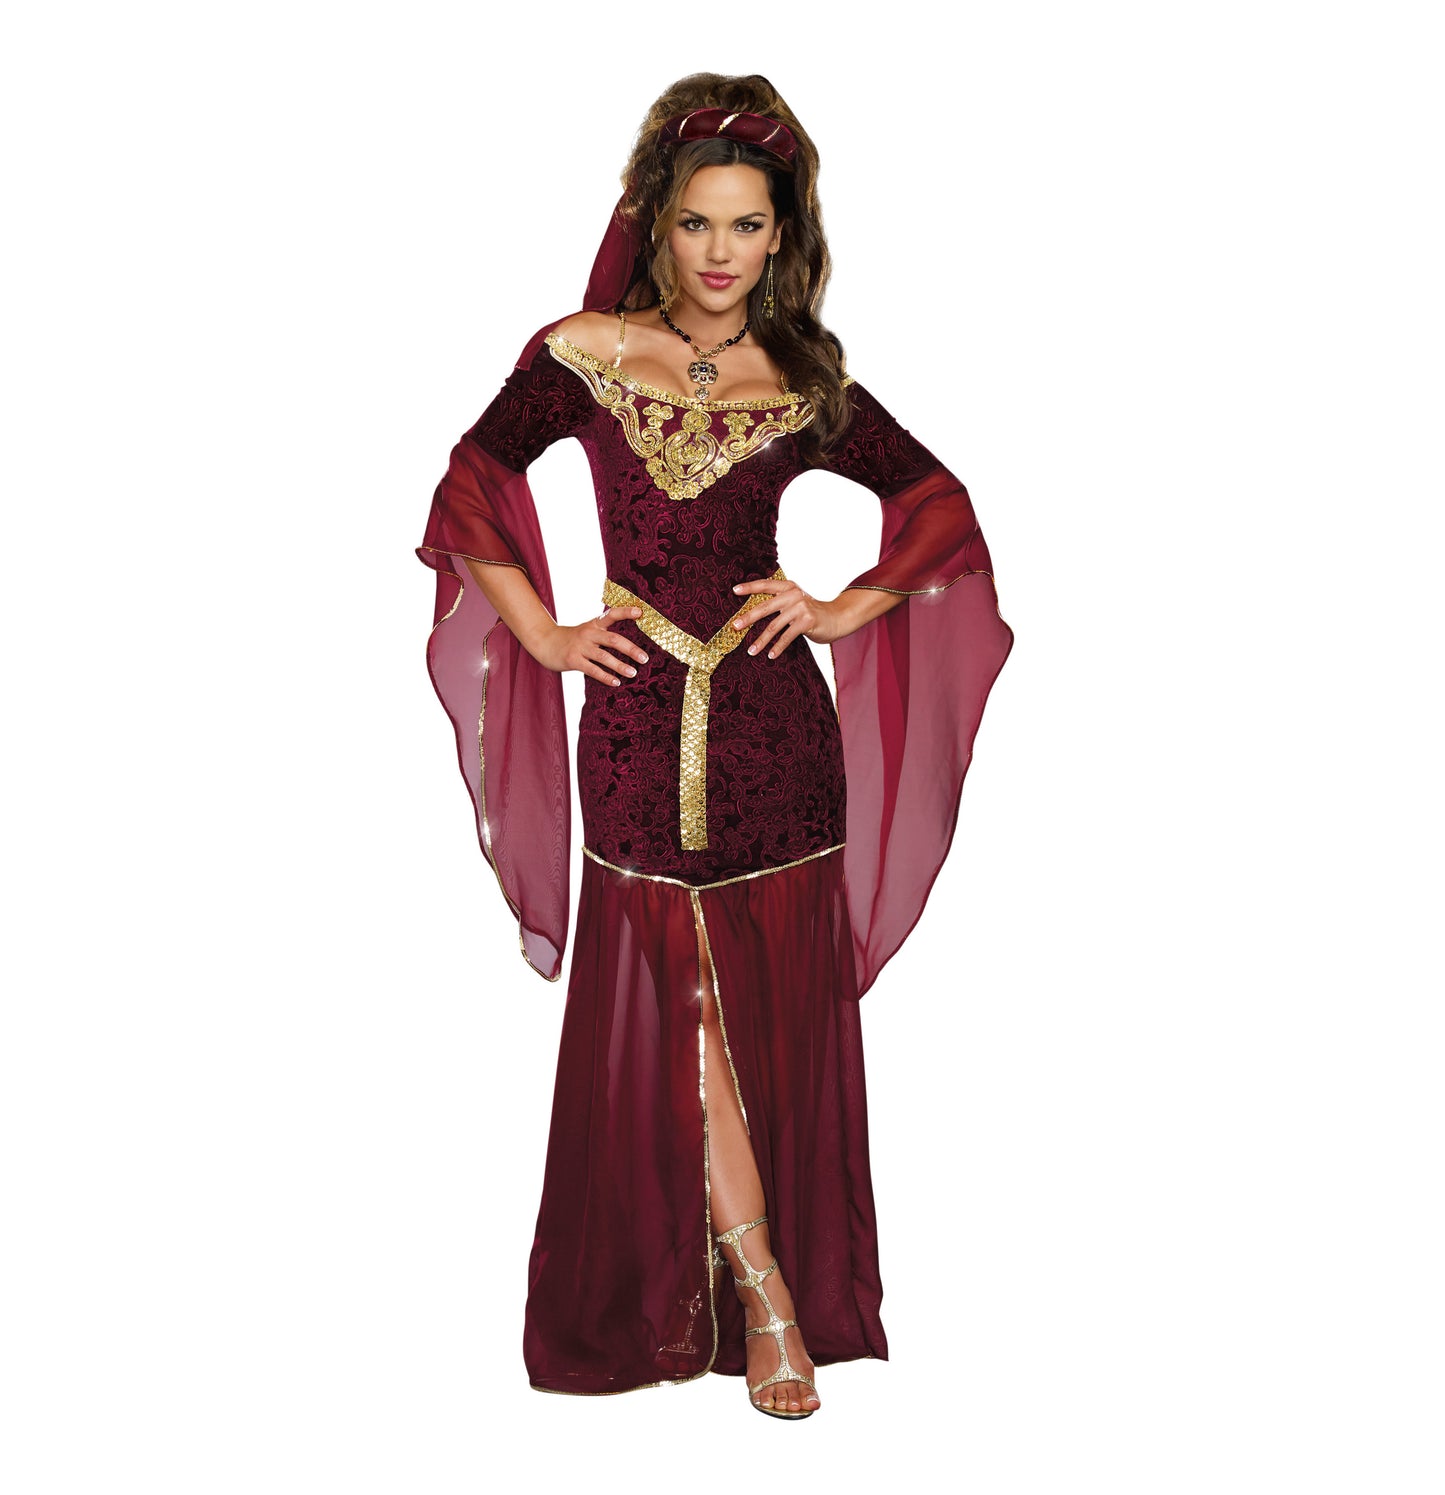 Medieval Enchantress Renaissance Maiden Adult Women Costume